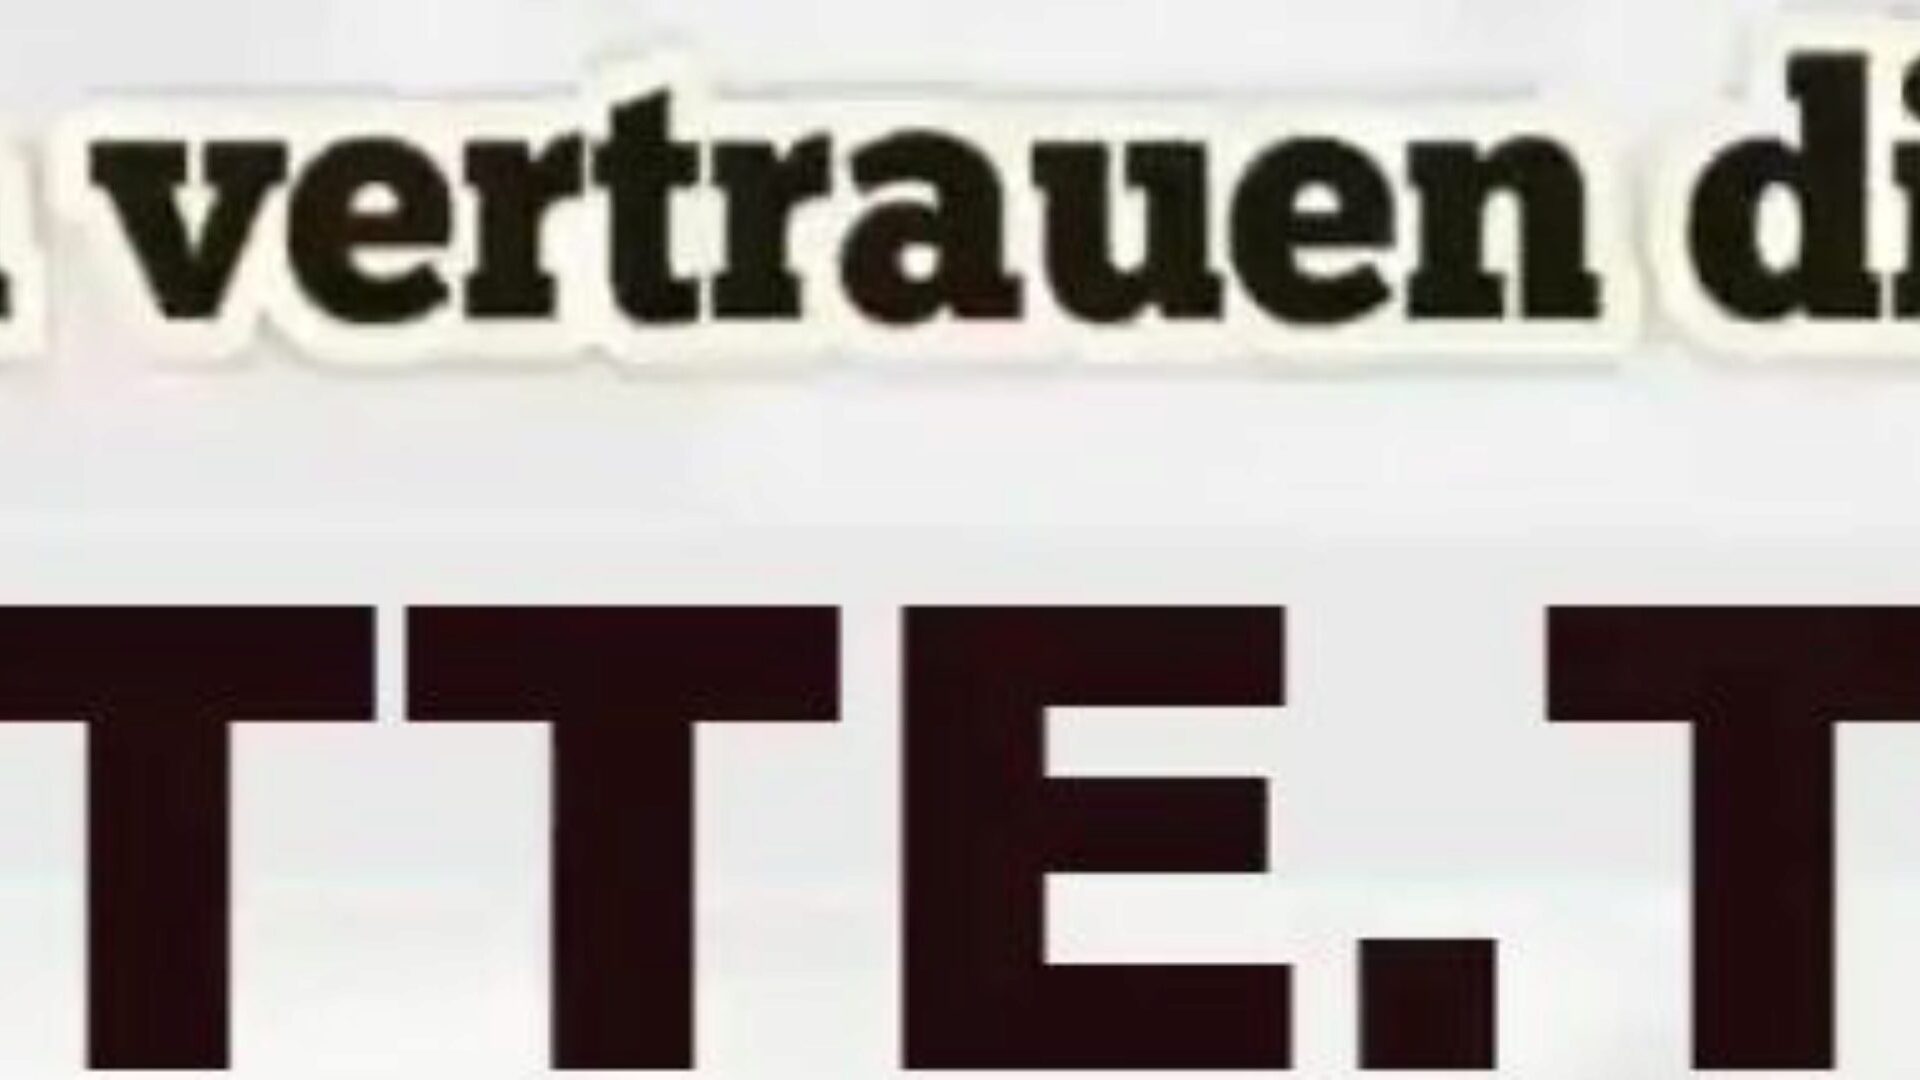 heibe brunette hundi n aus berlin wird gefickt: פורנו hd ee watch heibe brunette hundi n aus berlin wird gefickt video on xhamster - האוסף האולטימטיבי של פרק שפופרת פורנוגרפיה hd אמא גרמנית חינם.